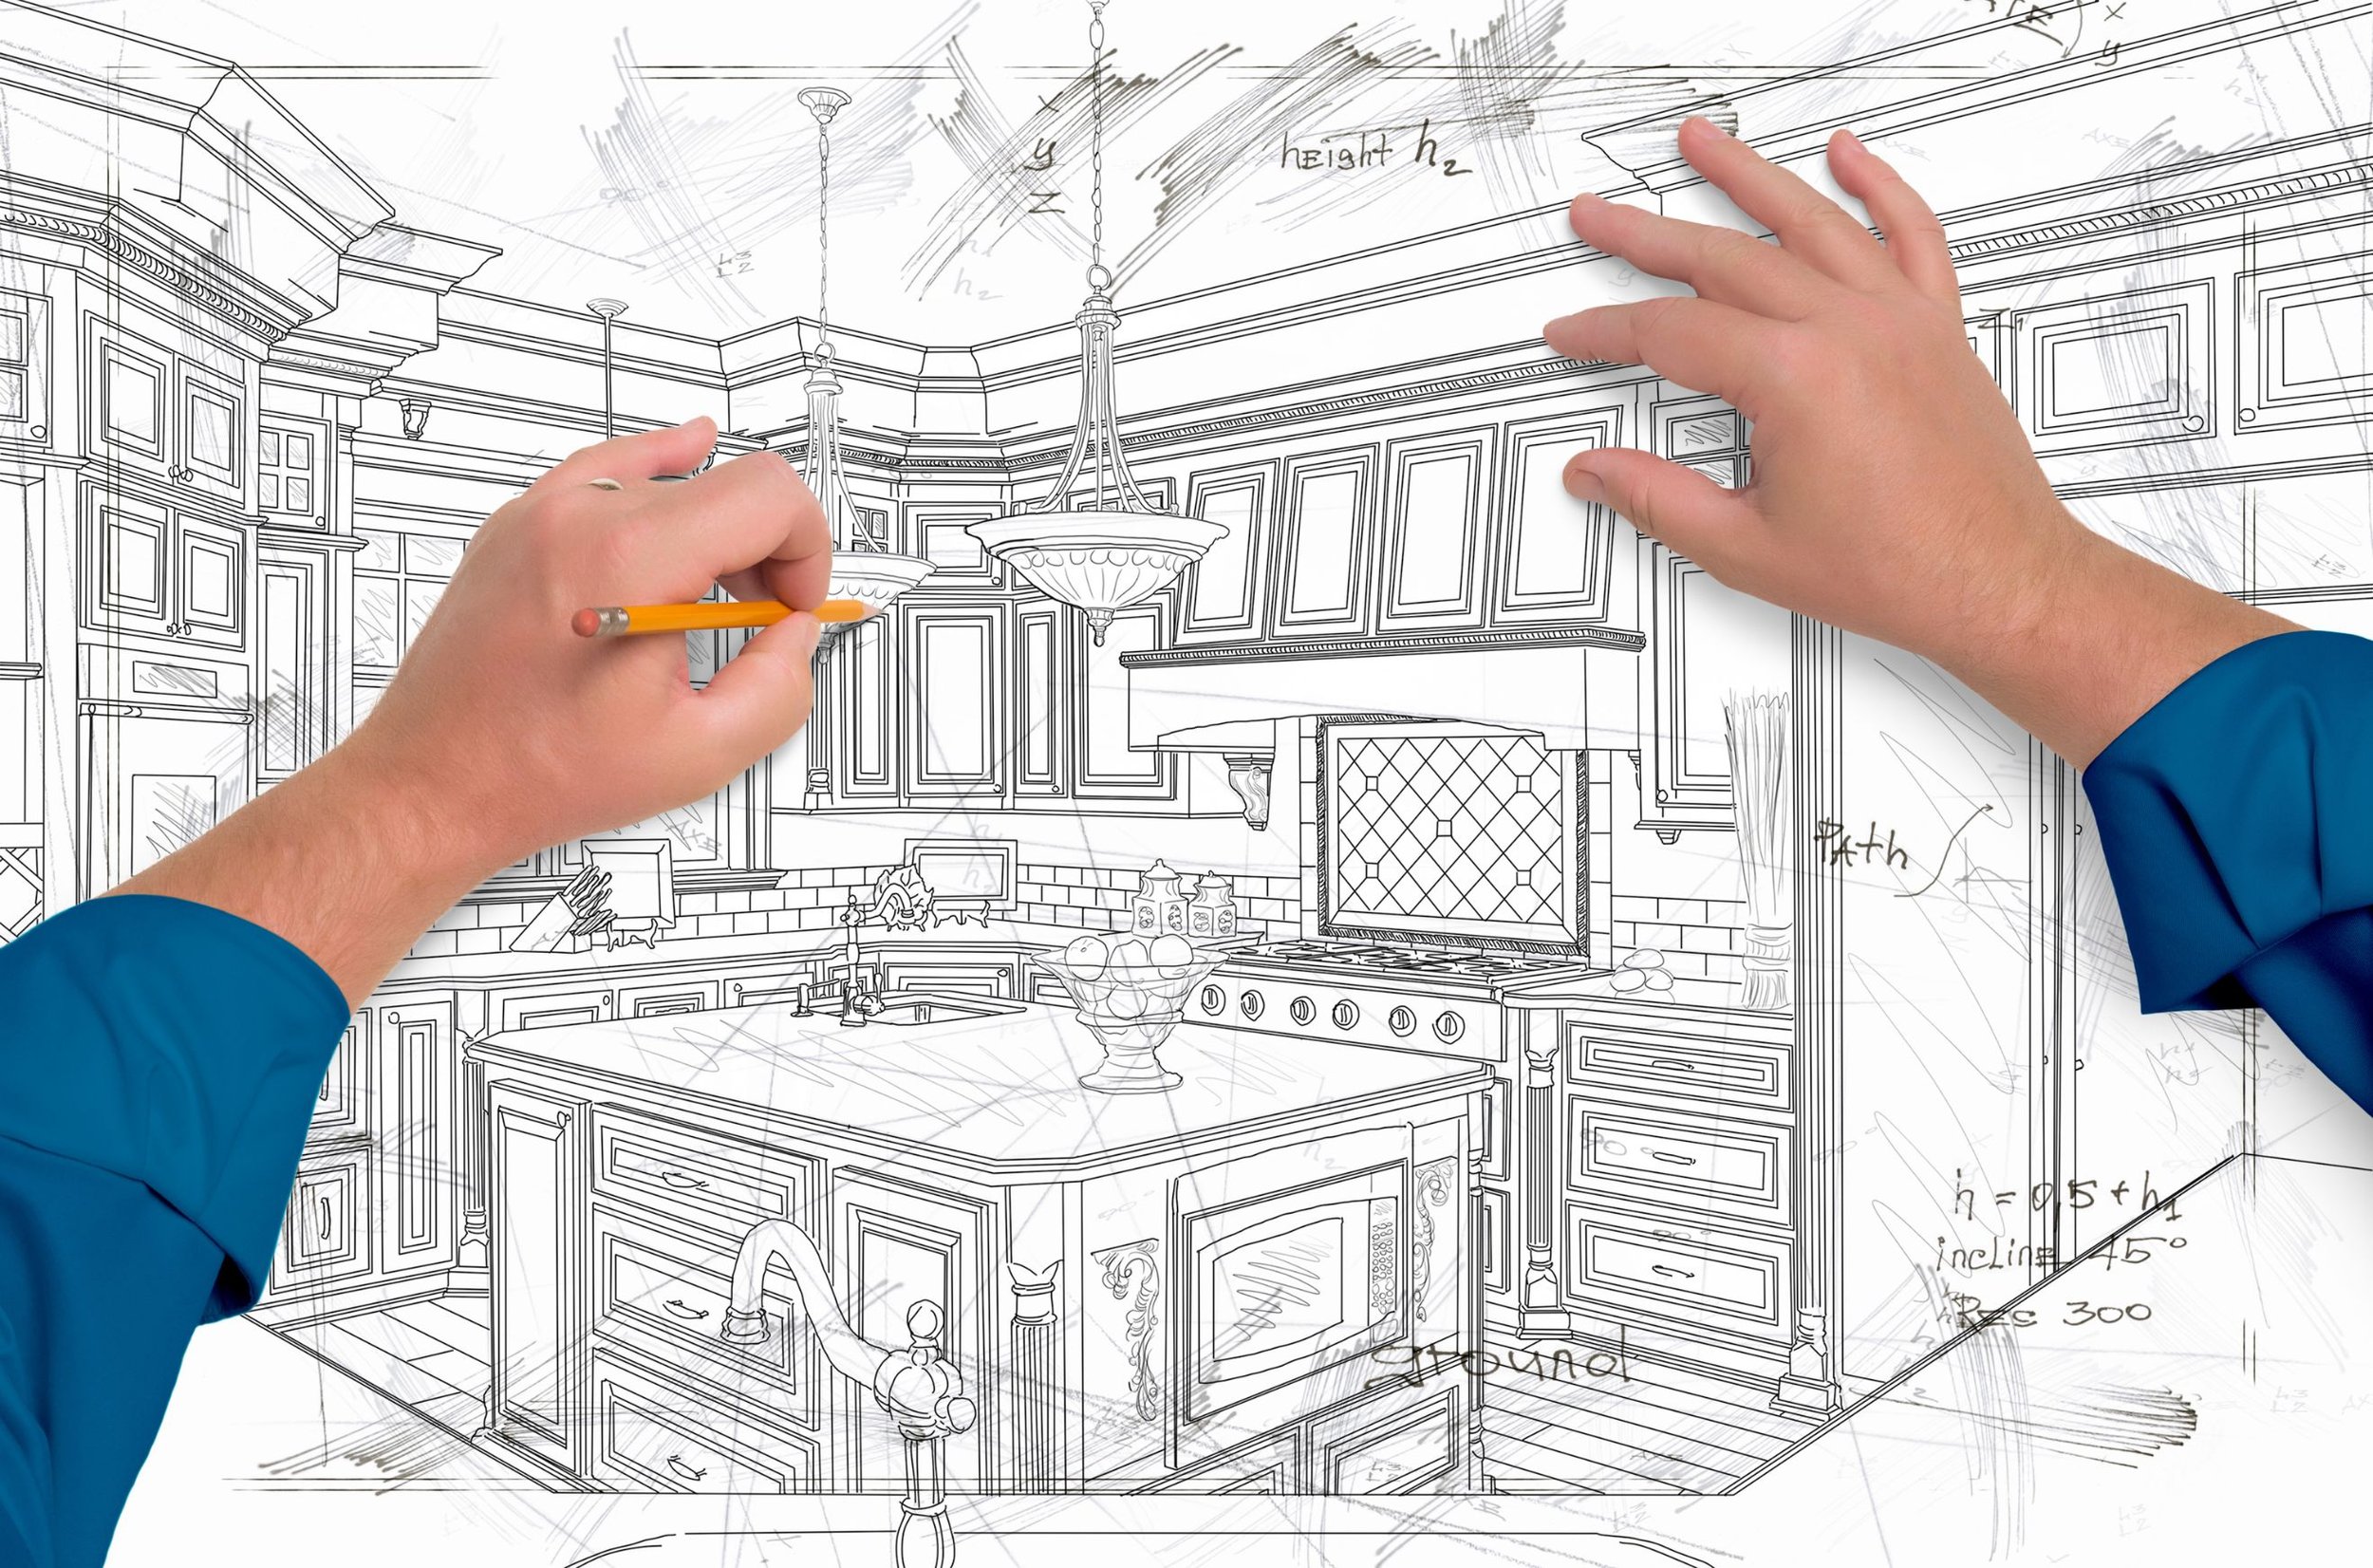 drawing-custom-kitchen-cabinets-design-details.jpg